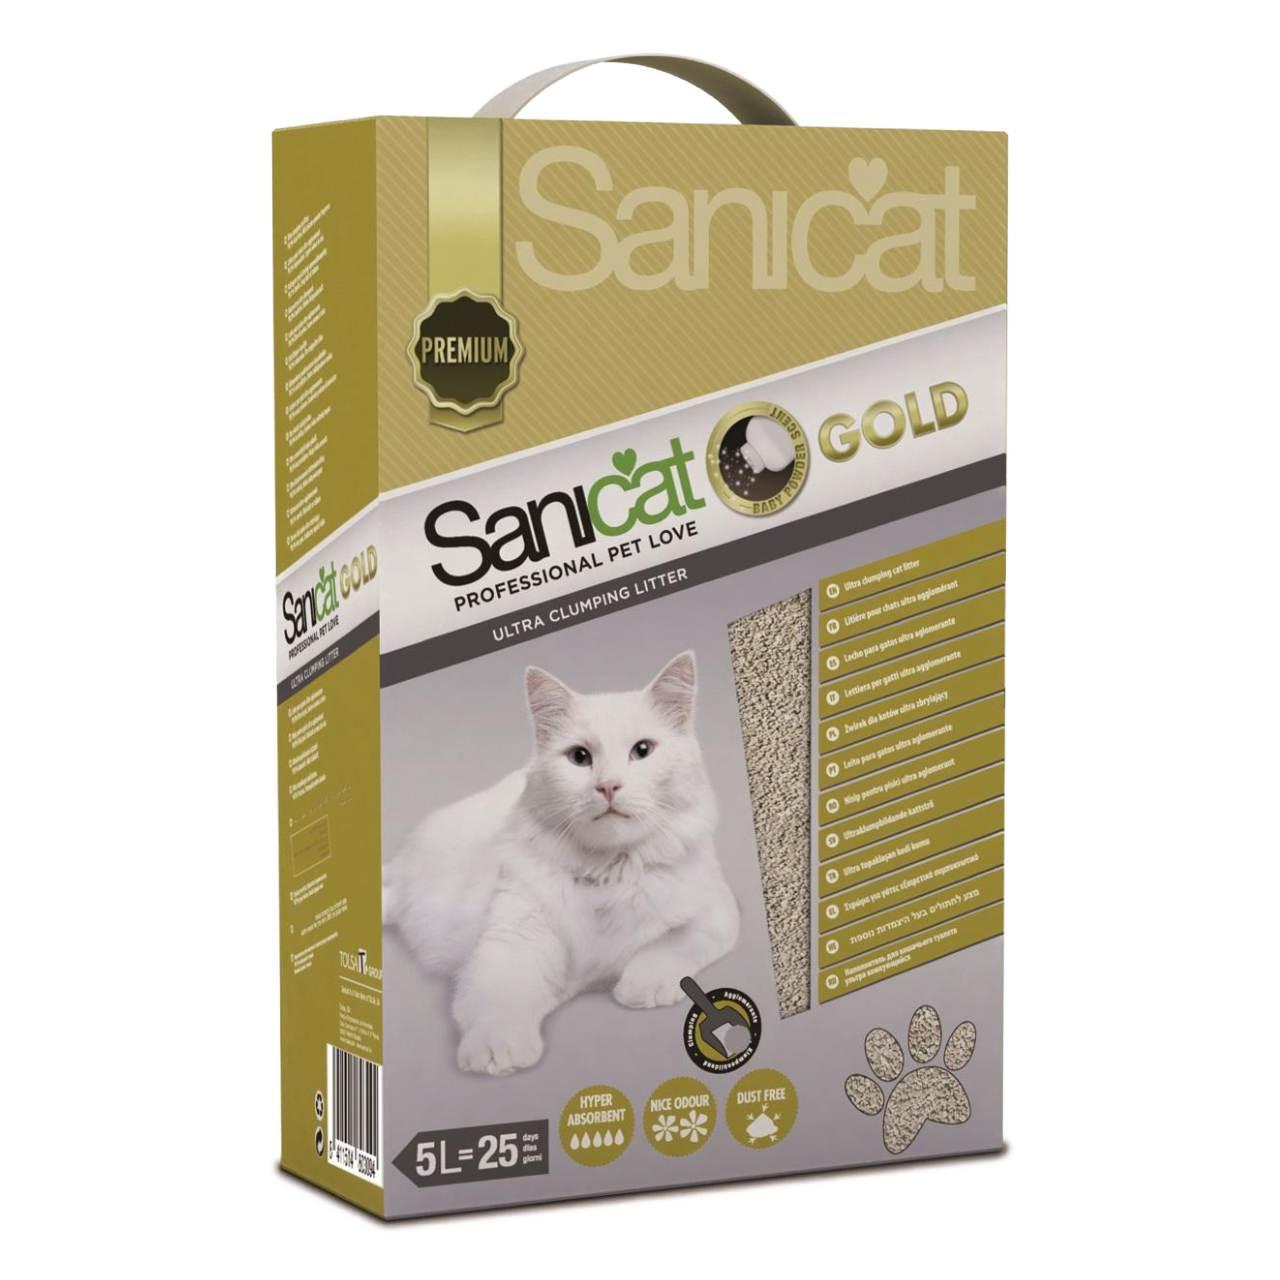 An image of Sanicat Gold Clumping Cat Litter